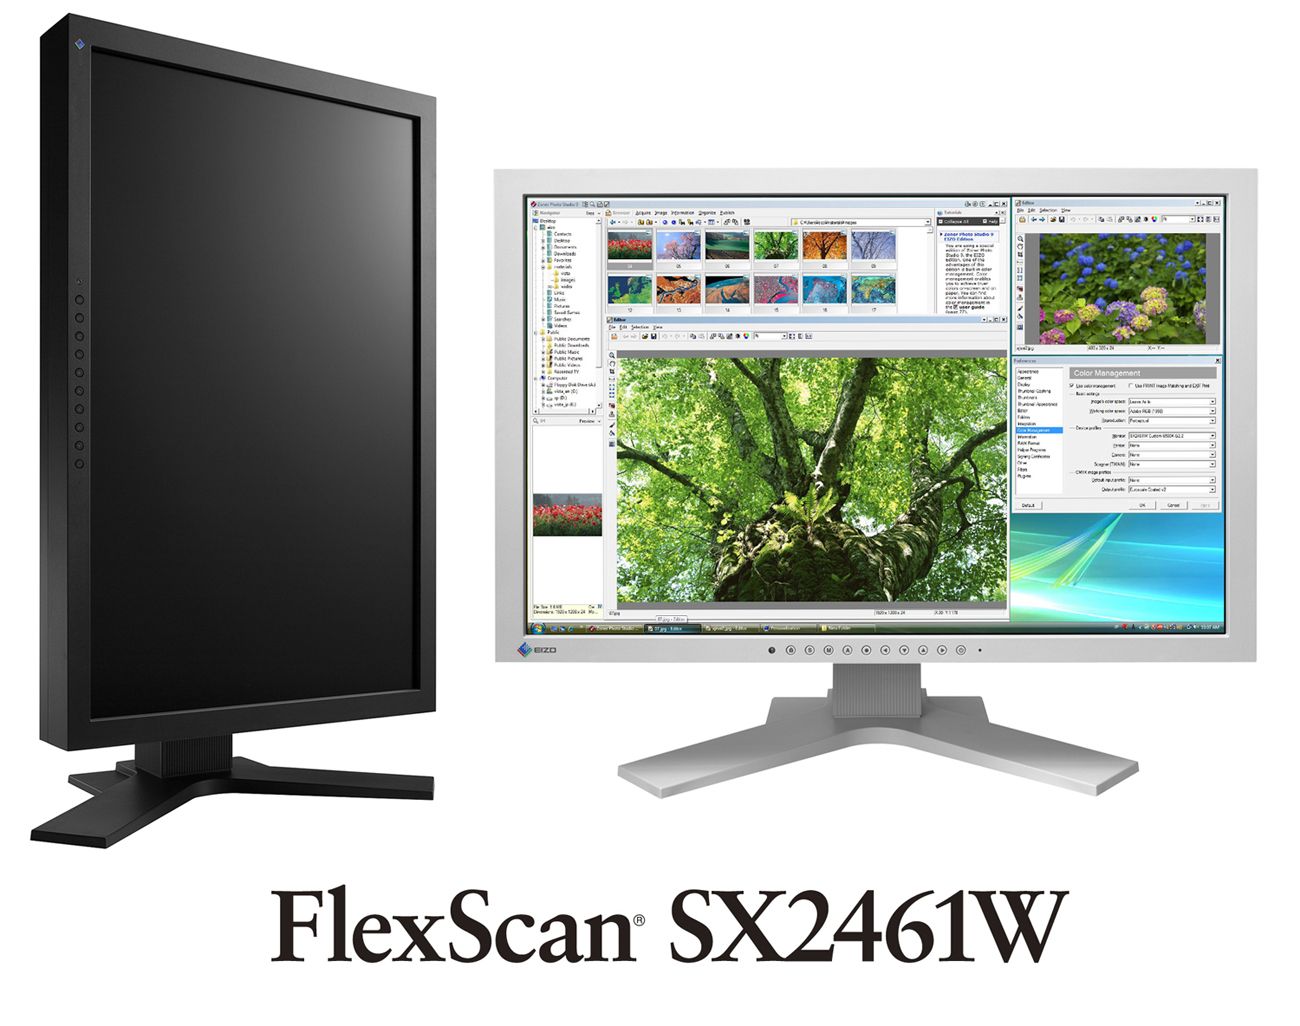 FlexScanSX2461W.jpg